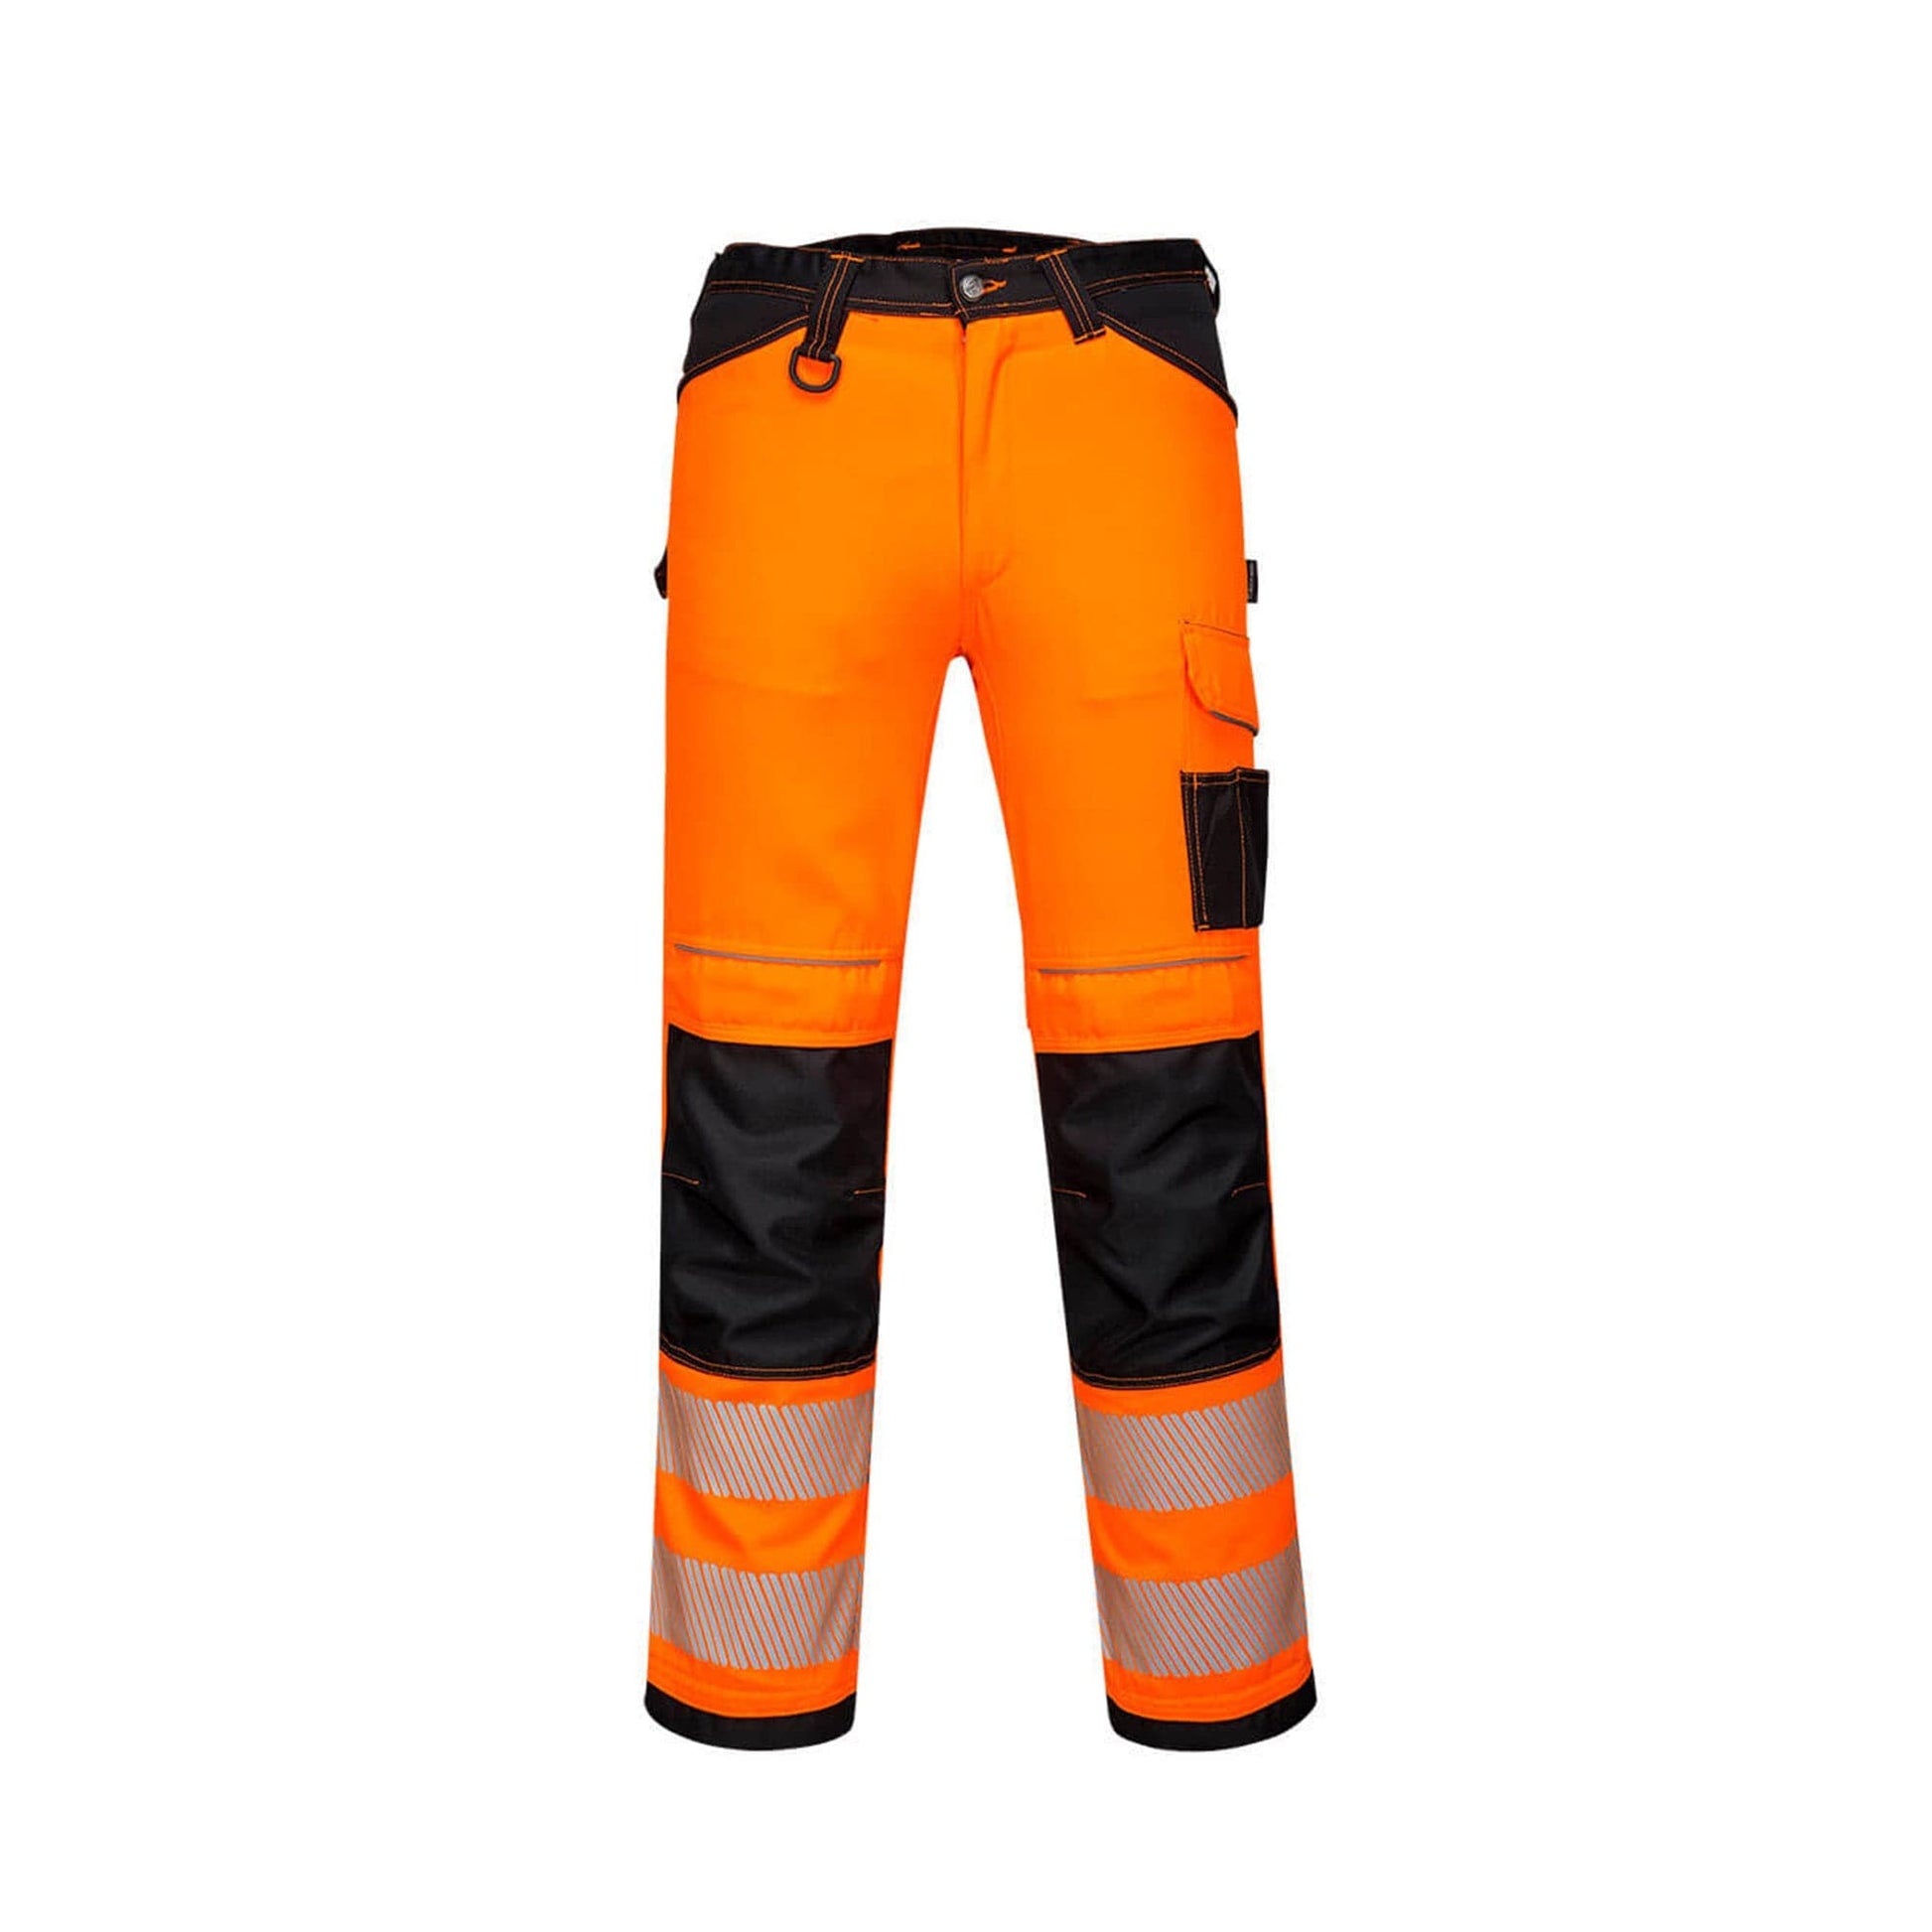 Portwest PW3 Hi-Vis Lightweight Stretch Work Trousers PW303 Orange/Black